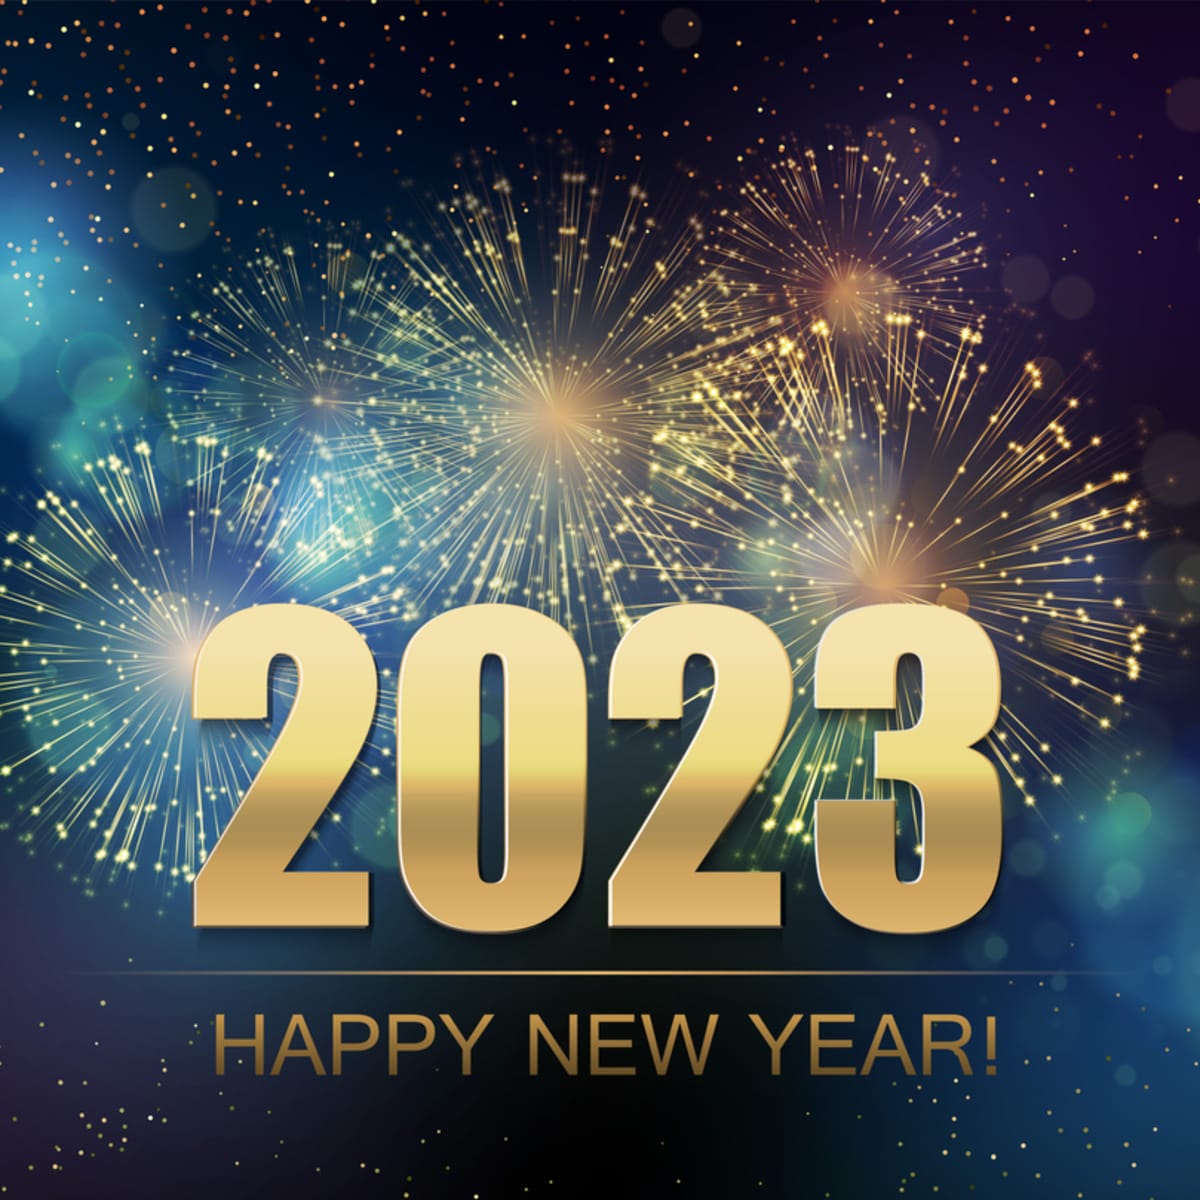 https://sgtwindflowermysteries.files.wordpress.com/2023/01/happy-new-year-2023.jpg